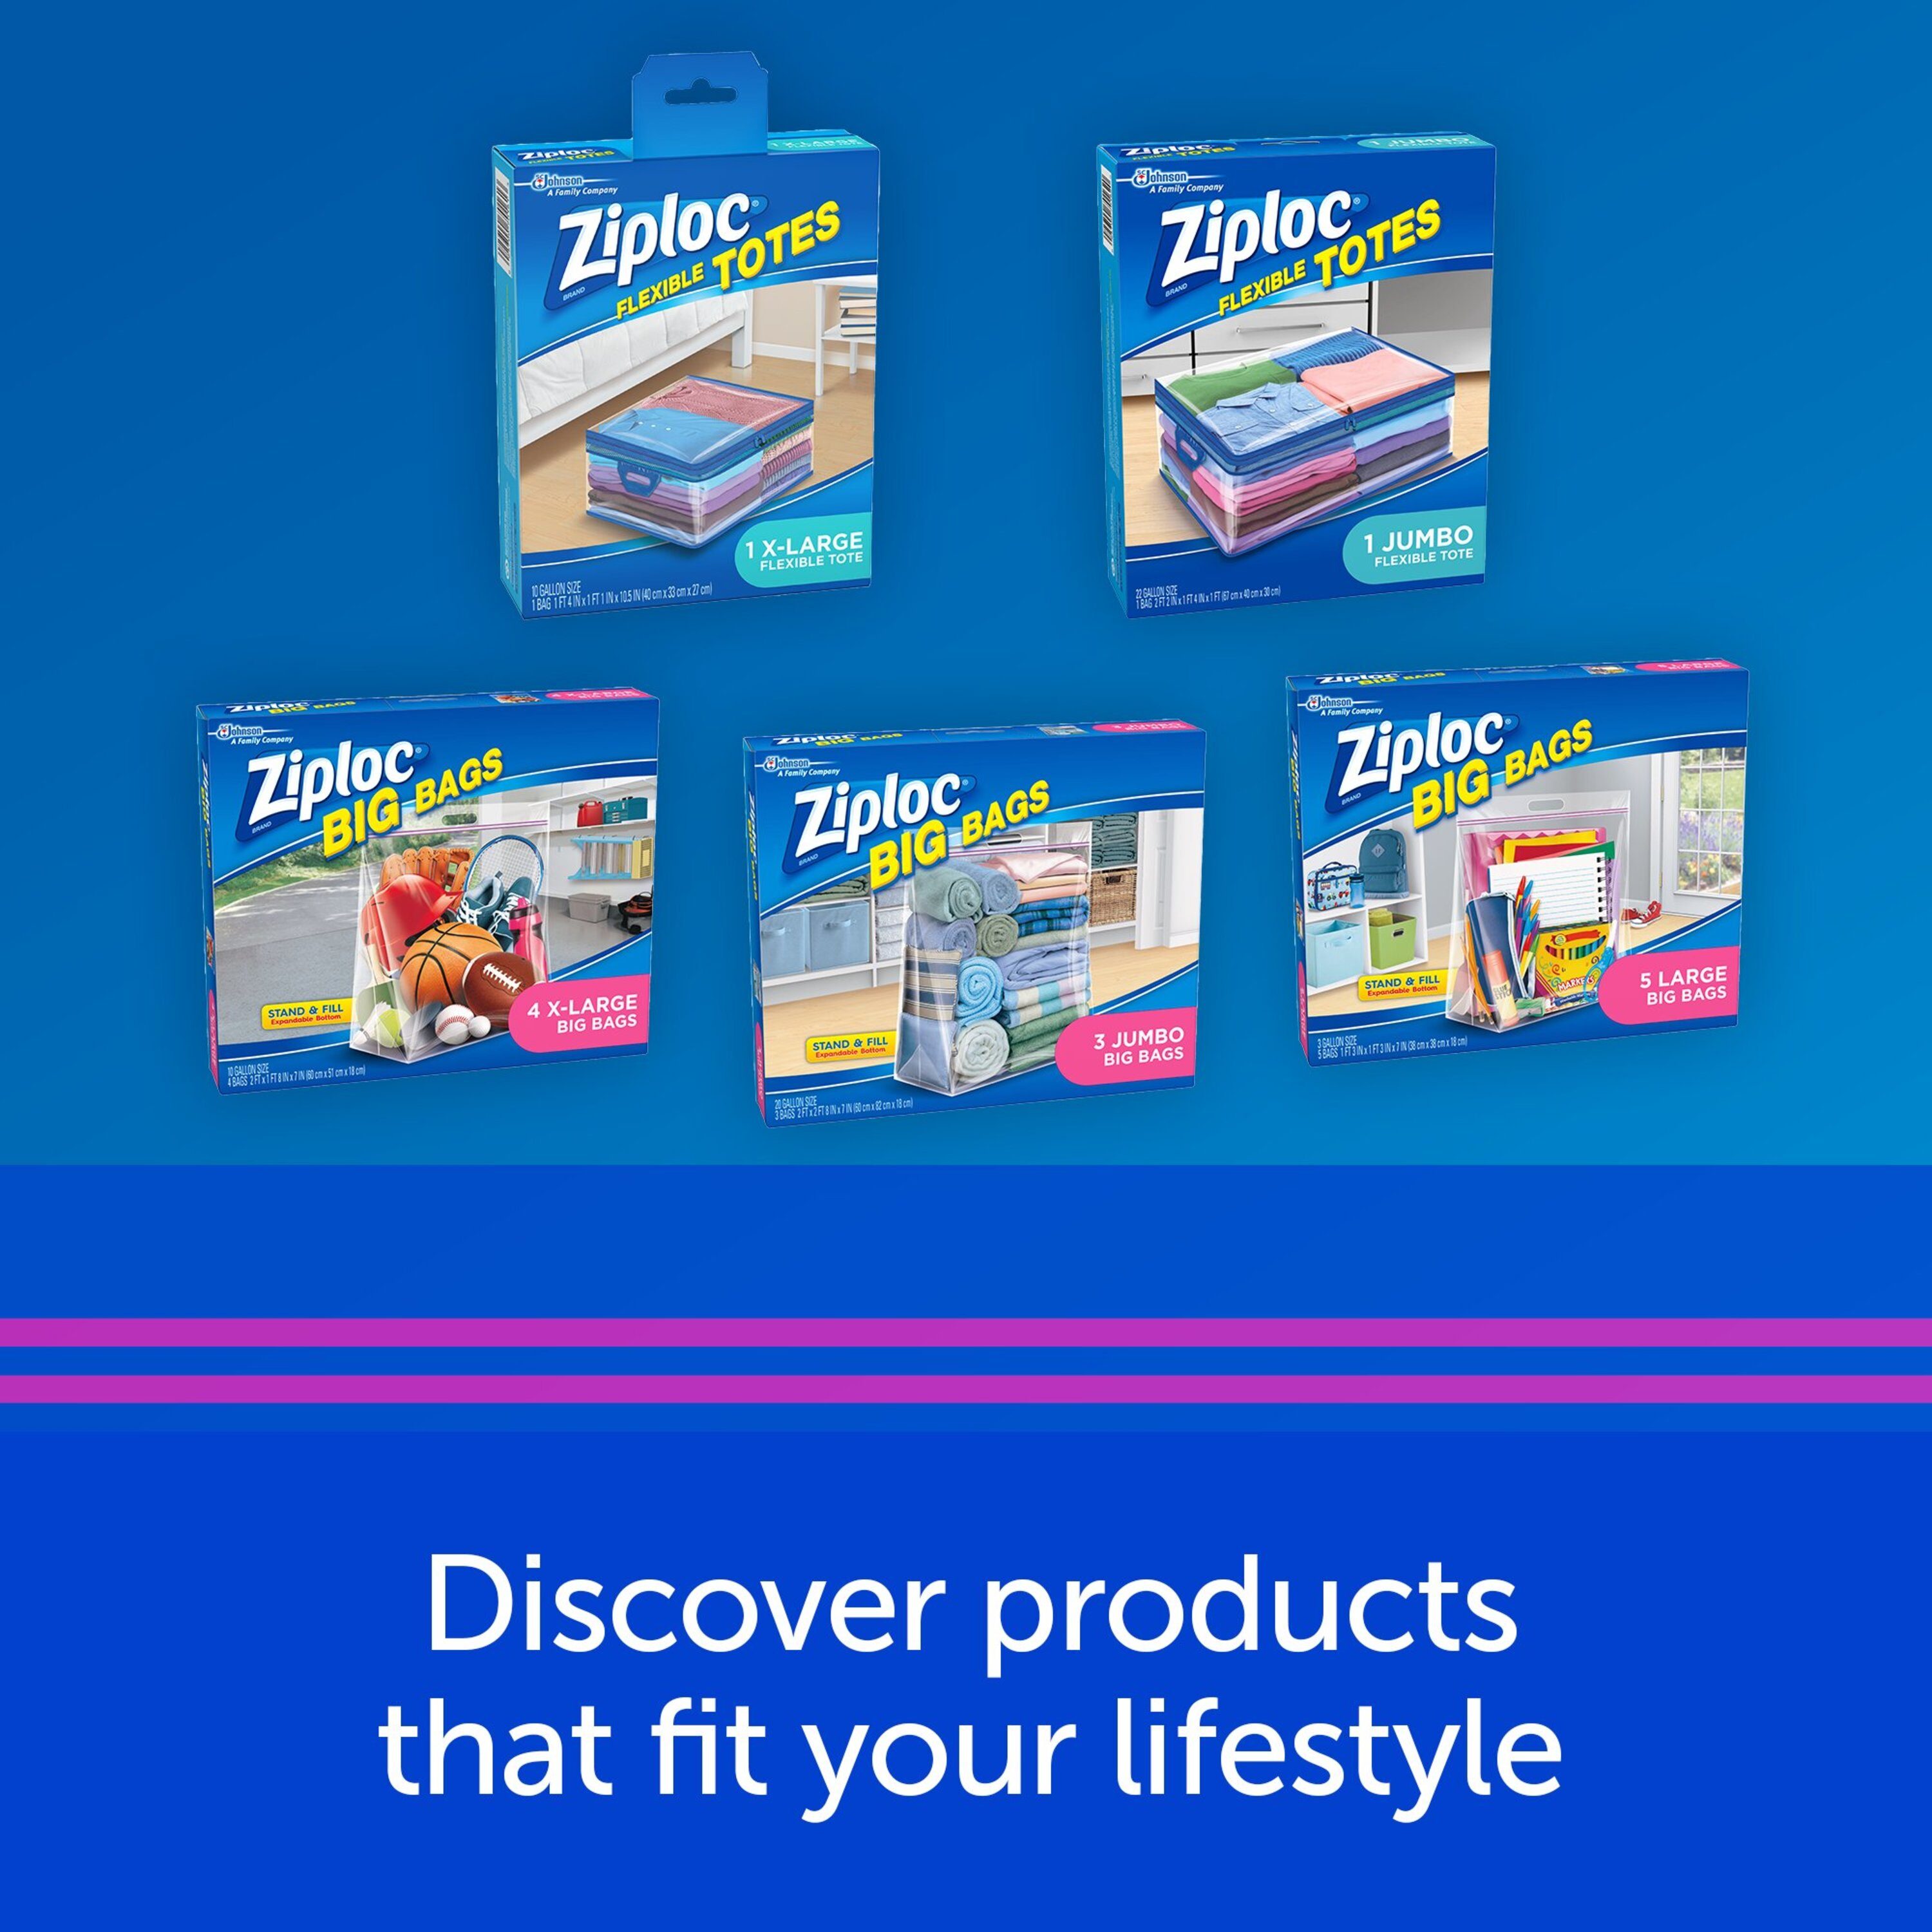 Buy Ziploc Flexible Totes Clothes Storage Bag 22 Gal., Blue